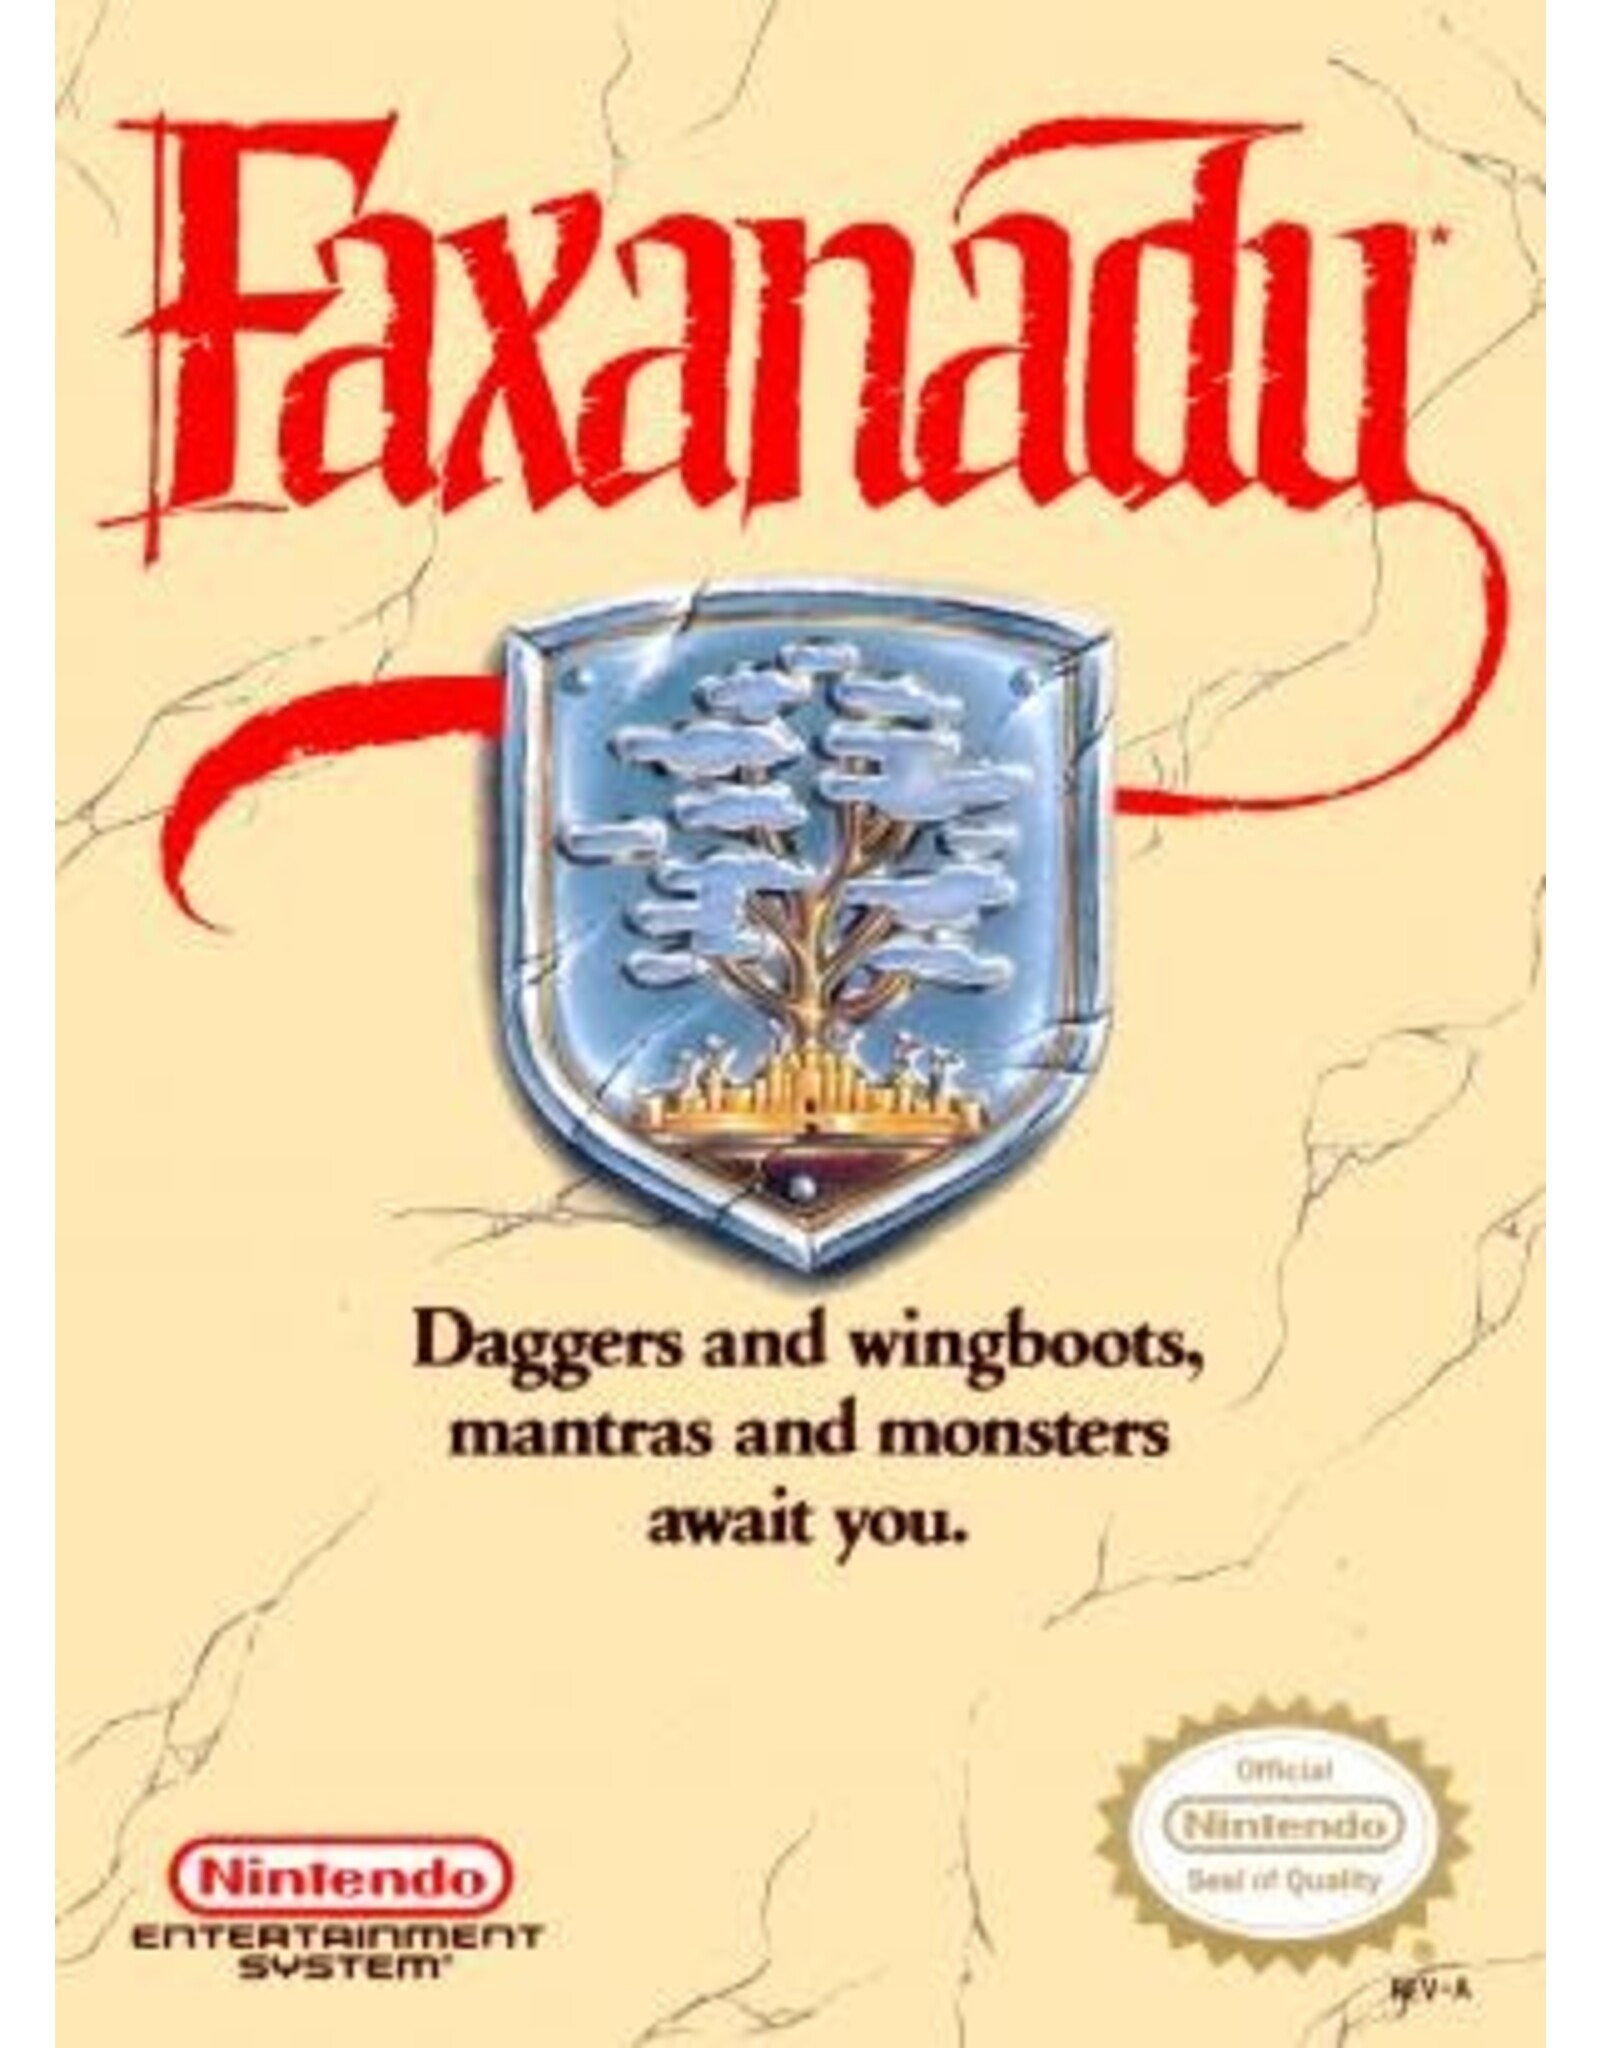 NES Faxanadu (Used, Cart Only)